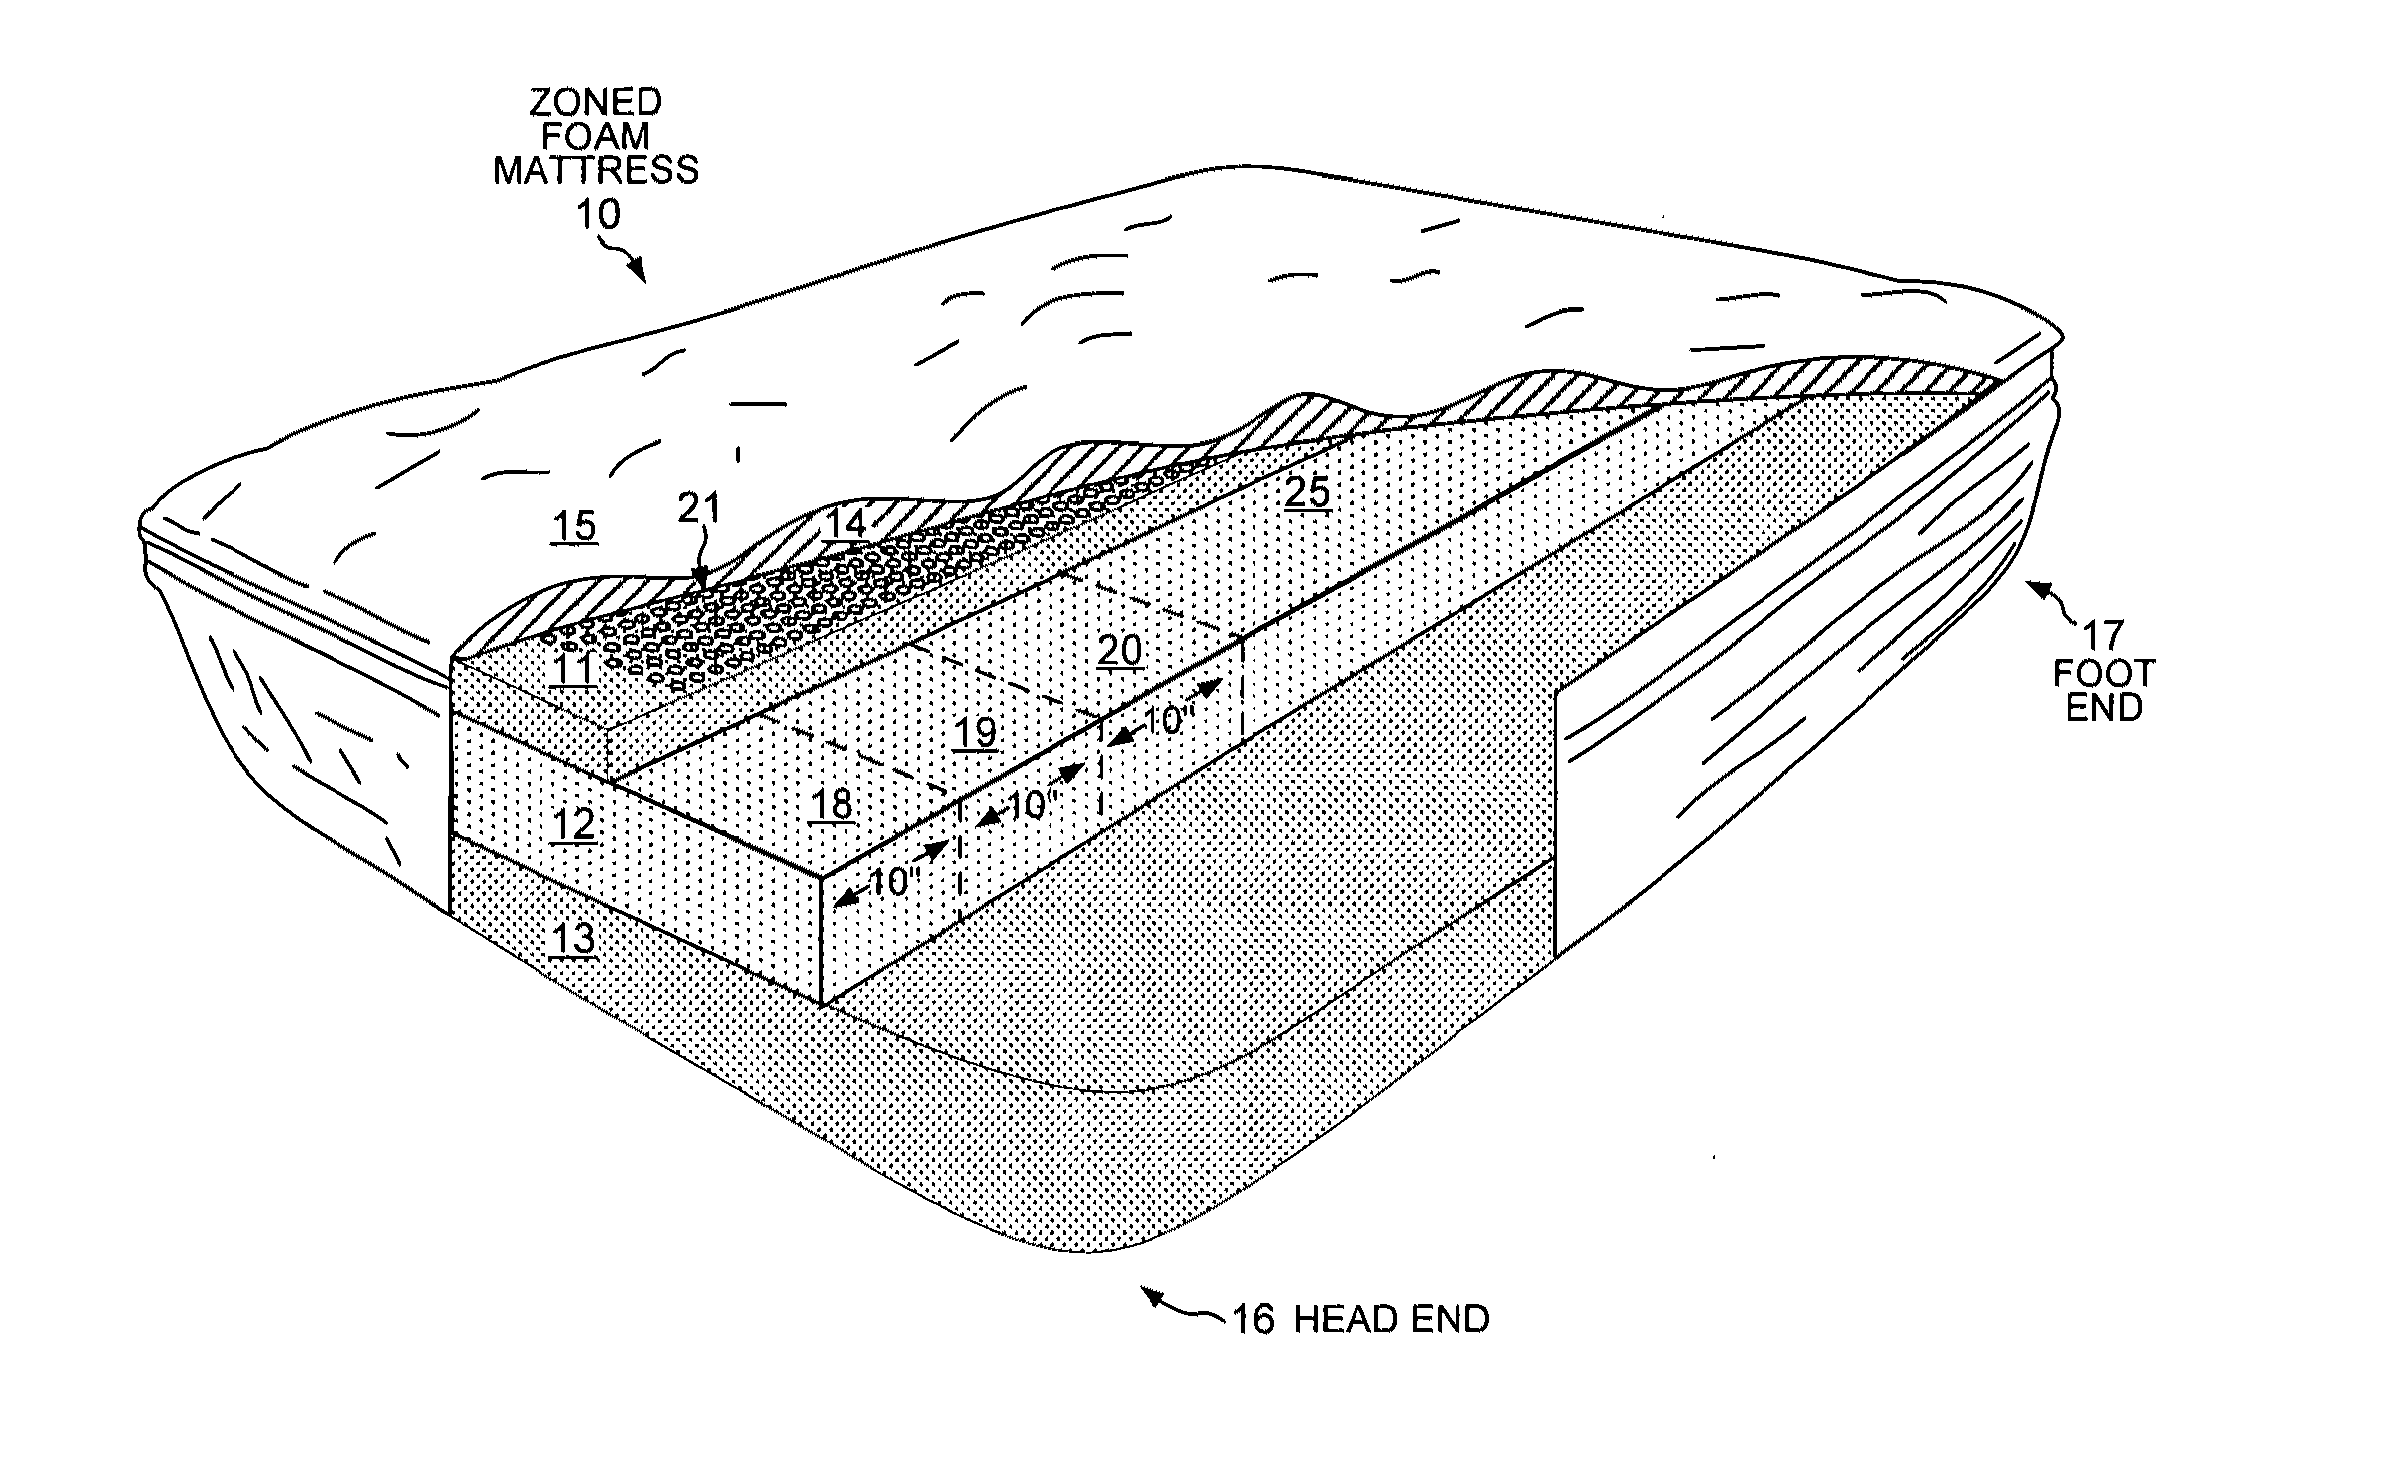 Zoned foam mattress with alternating lateral regions of HD foam and memory foam